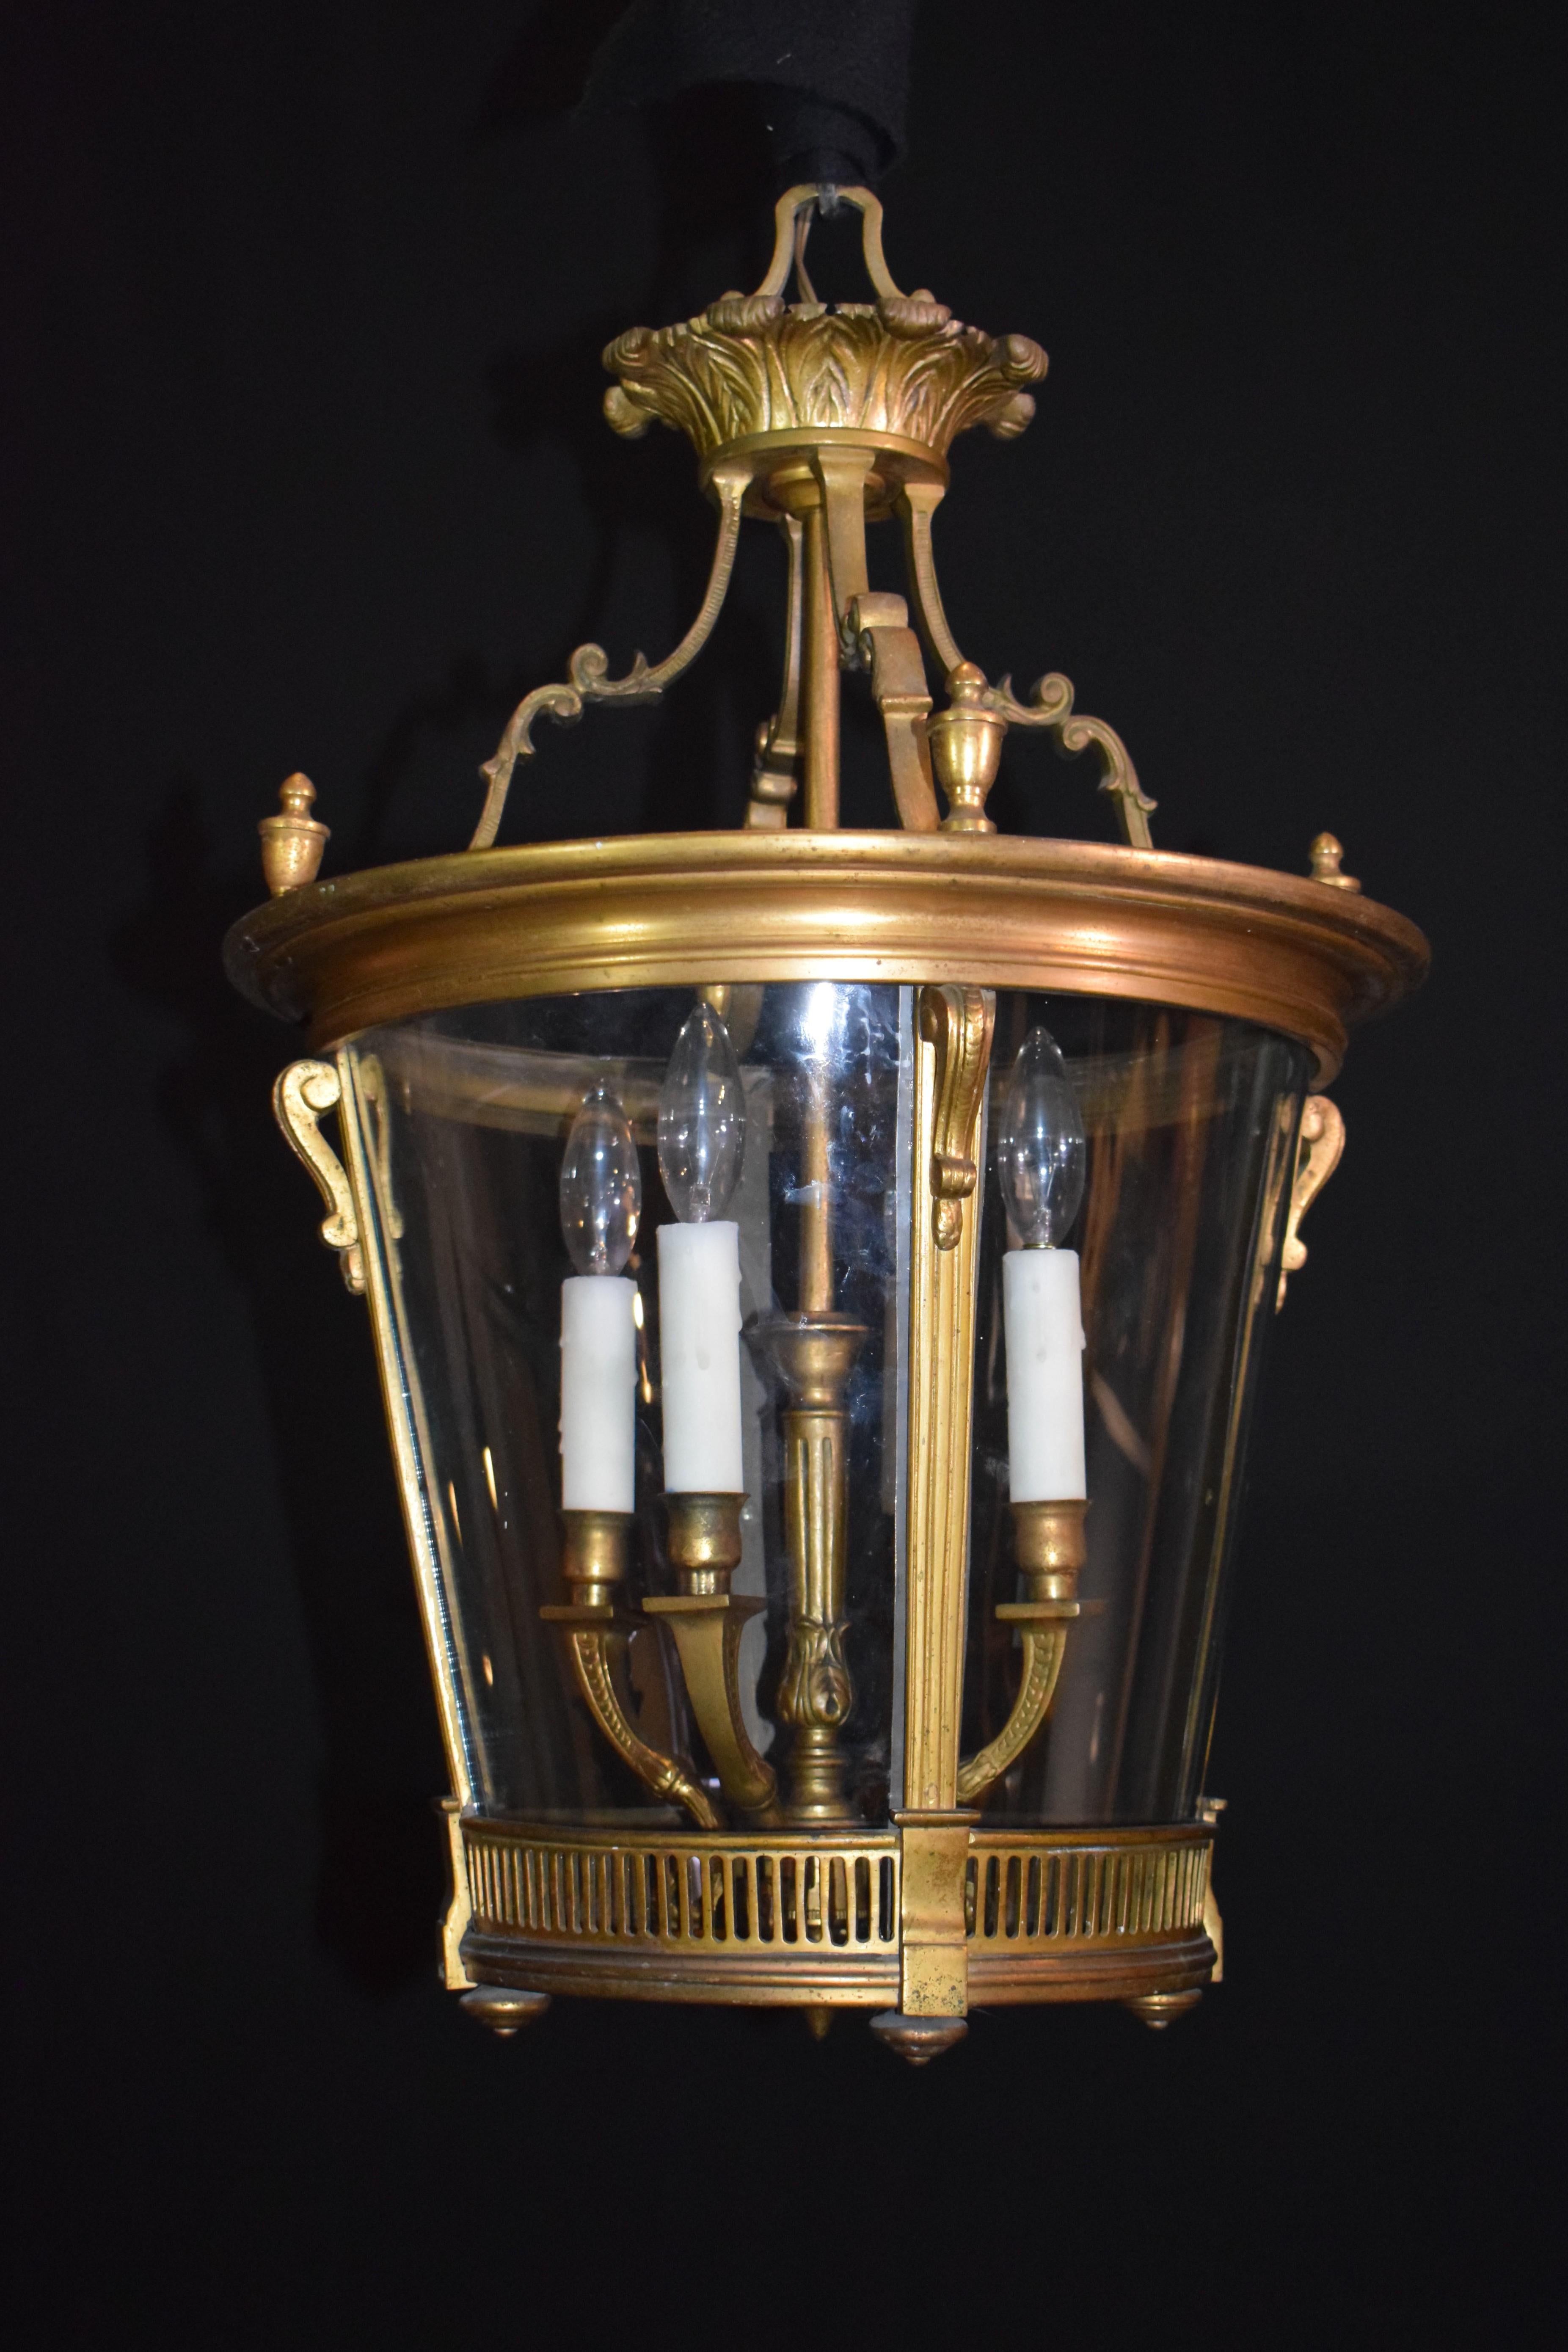 A superb and elegant gilt bronze lantern with curved glass panels.
France, circa 1910.
4 lights
Measures: 25